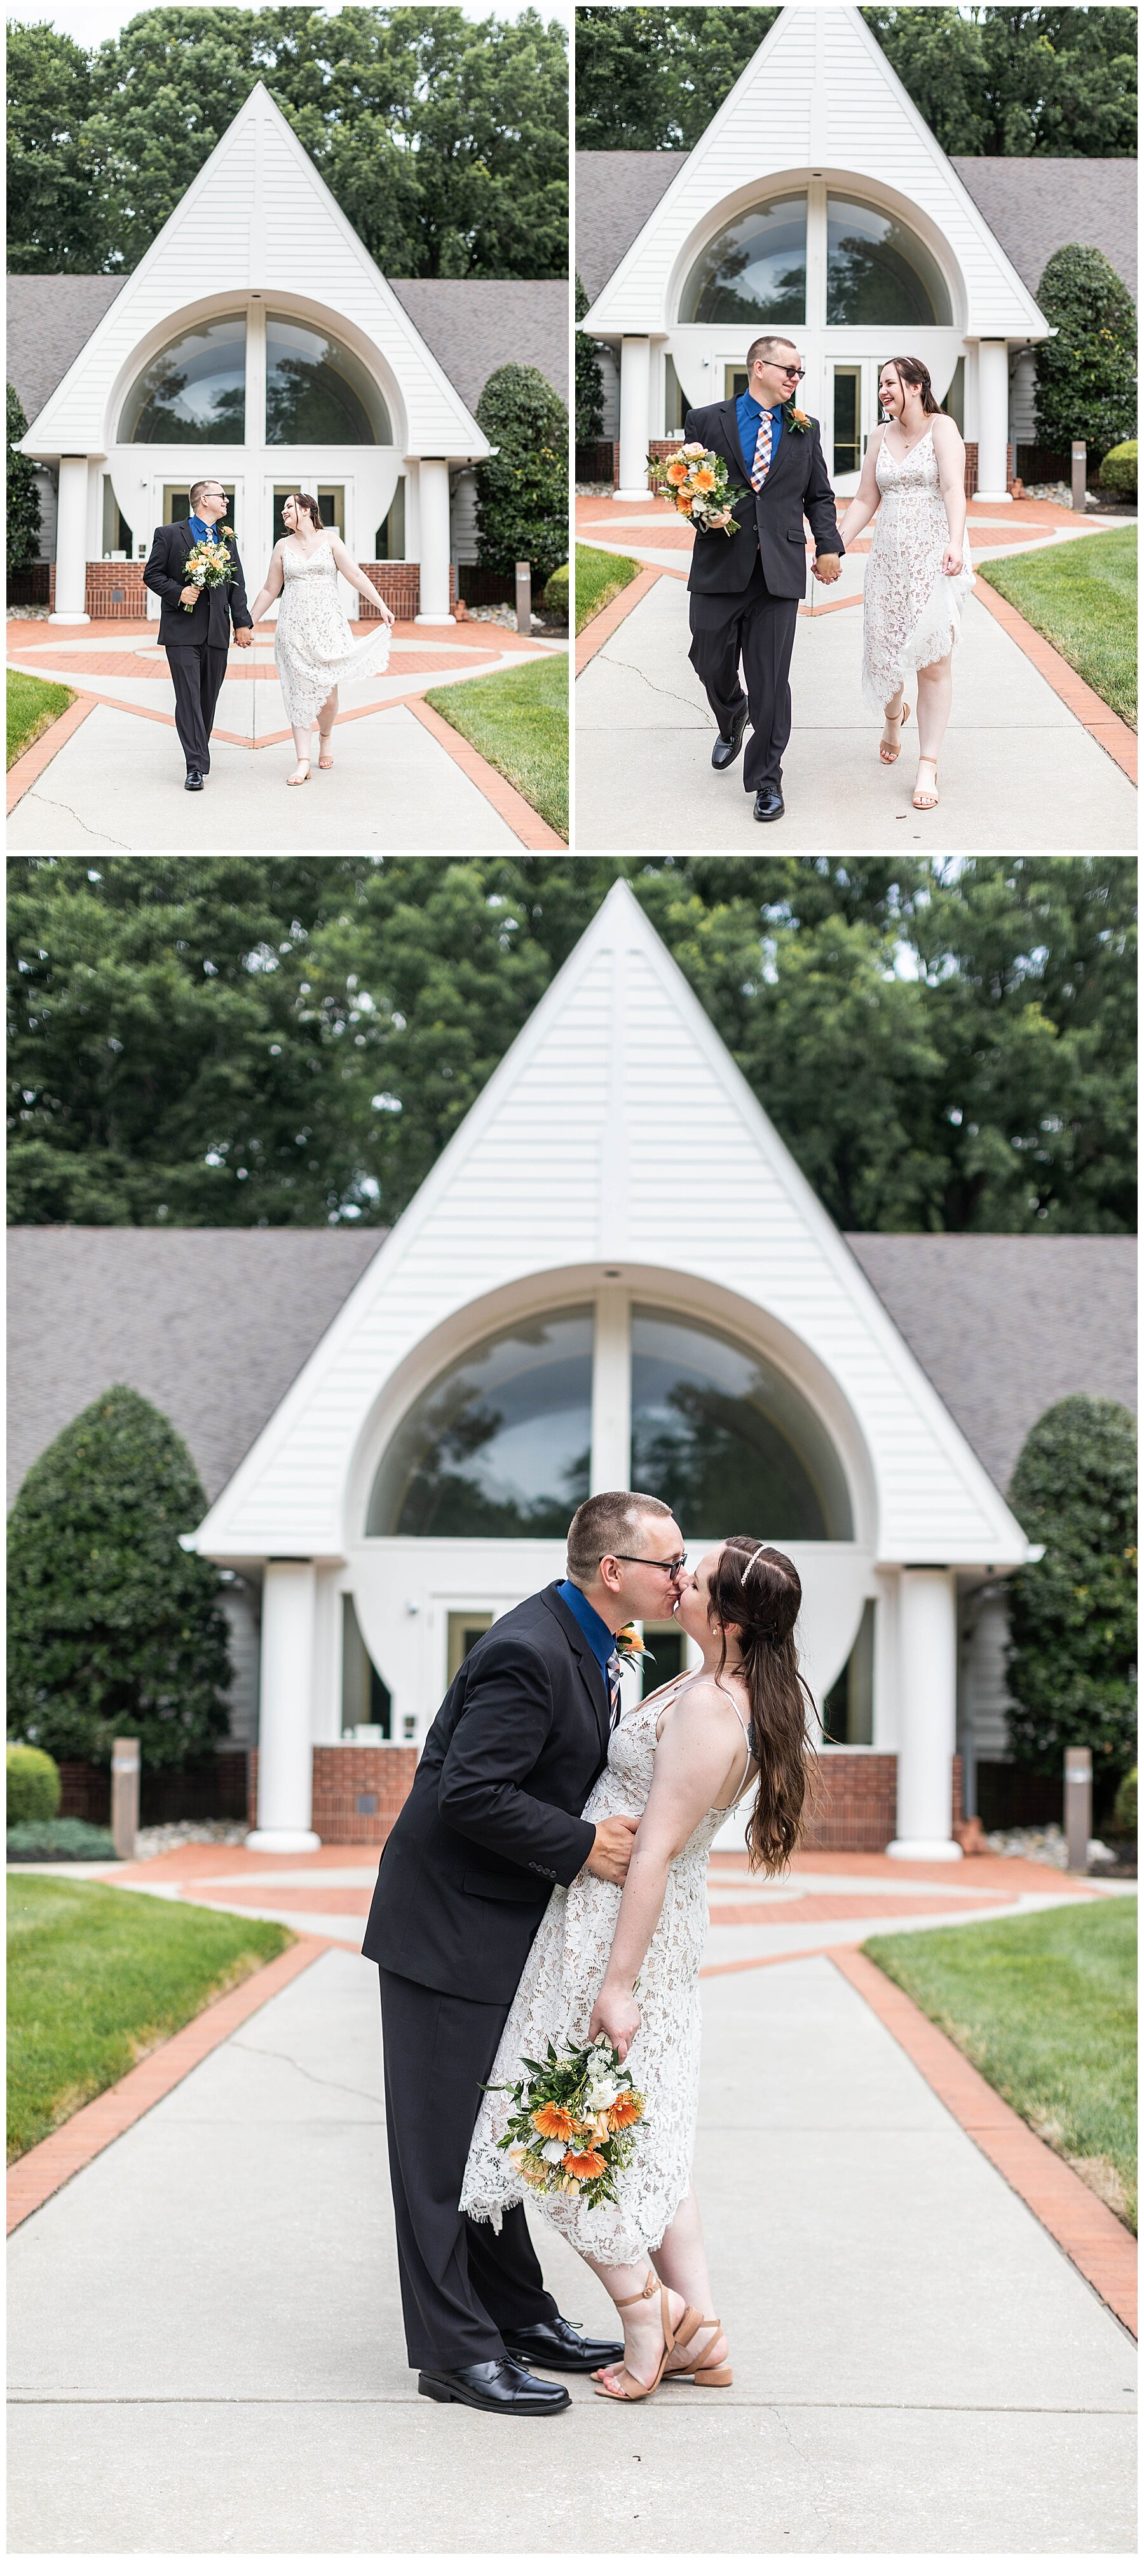 Clare Zach Beloved Weddings Living Radiant Photography - 2020-06-25_0114.jpg